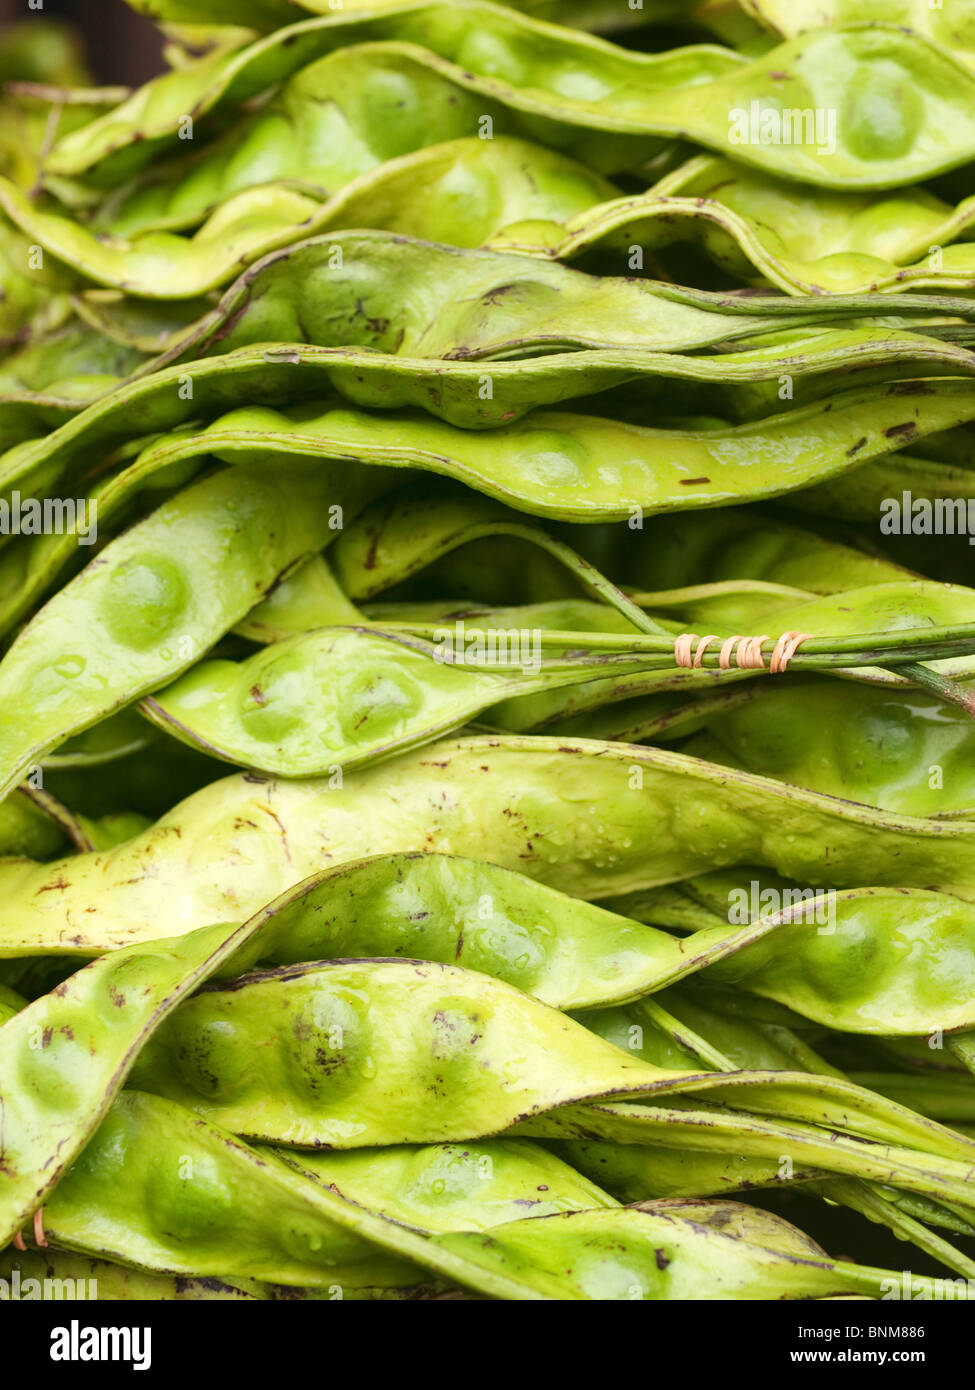 Malaysia green beans Stock Photo